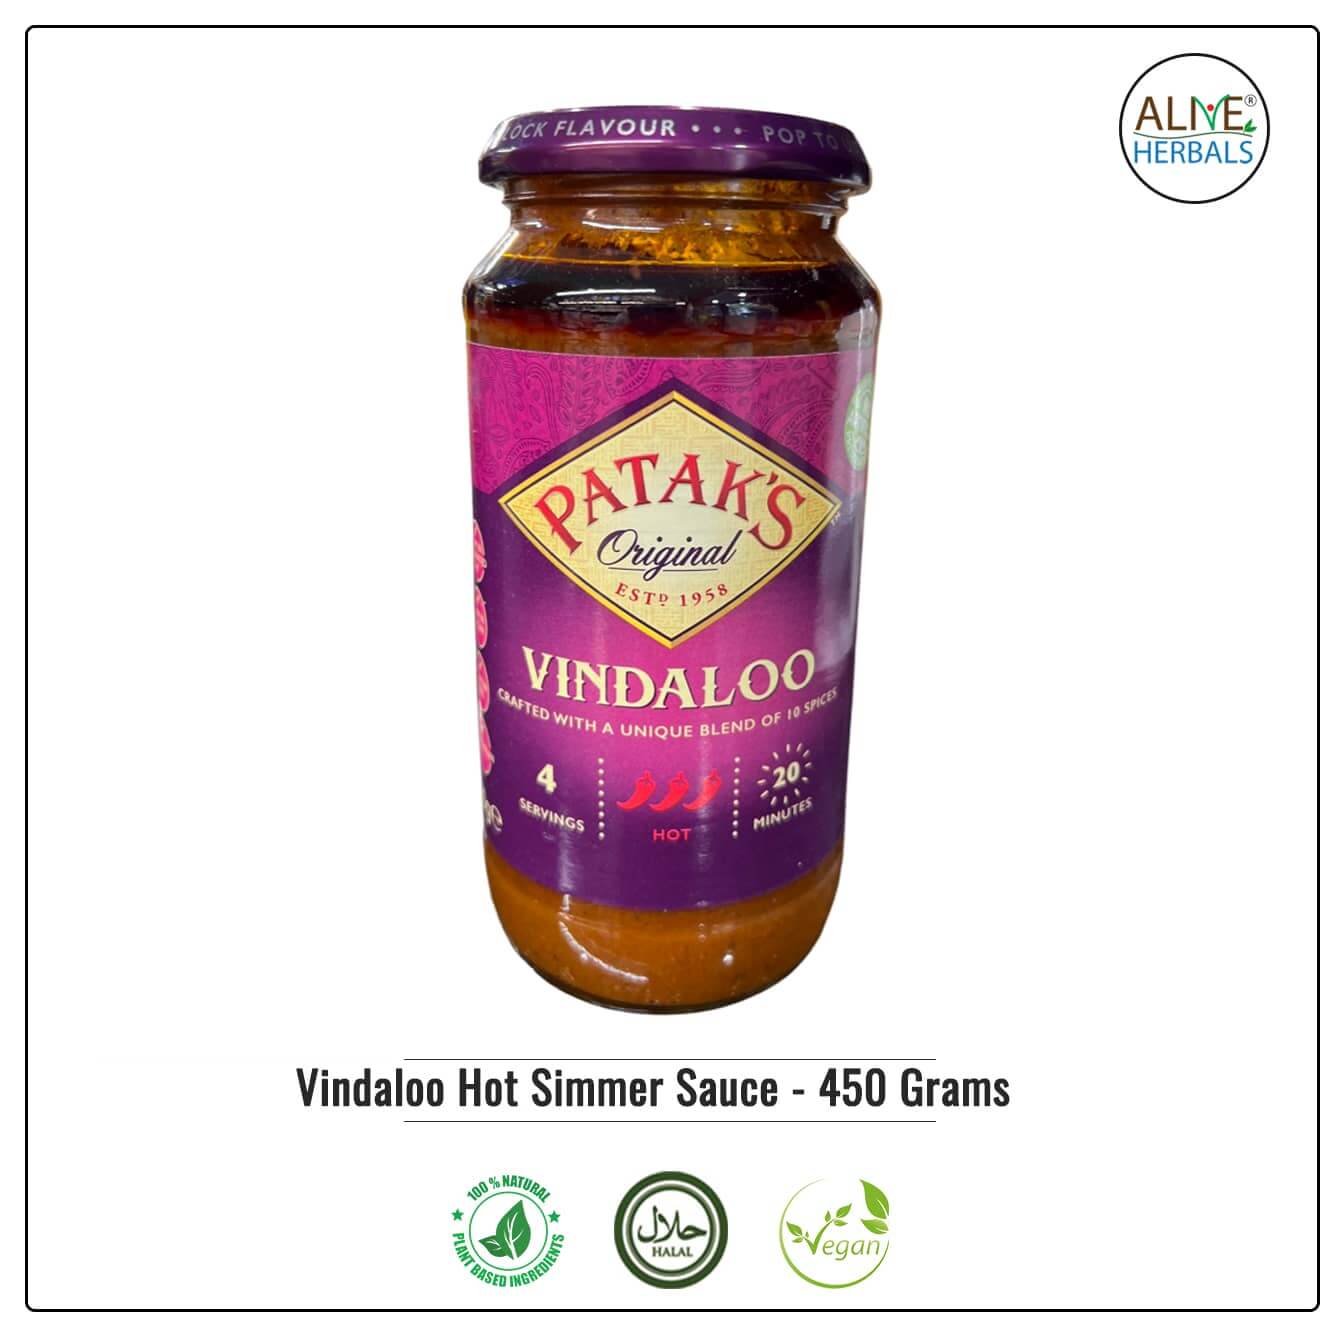 Vindaloo Hot Simmer Sauce - Alive Herbals